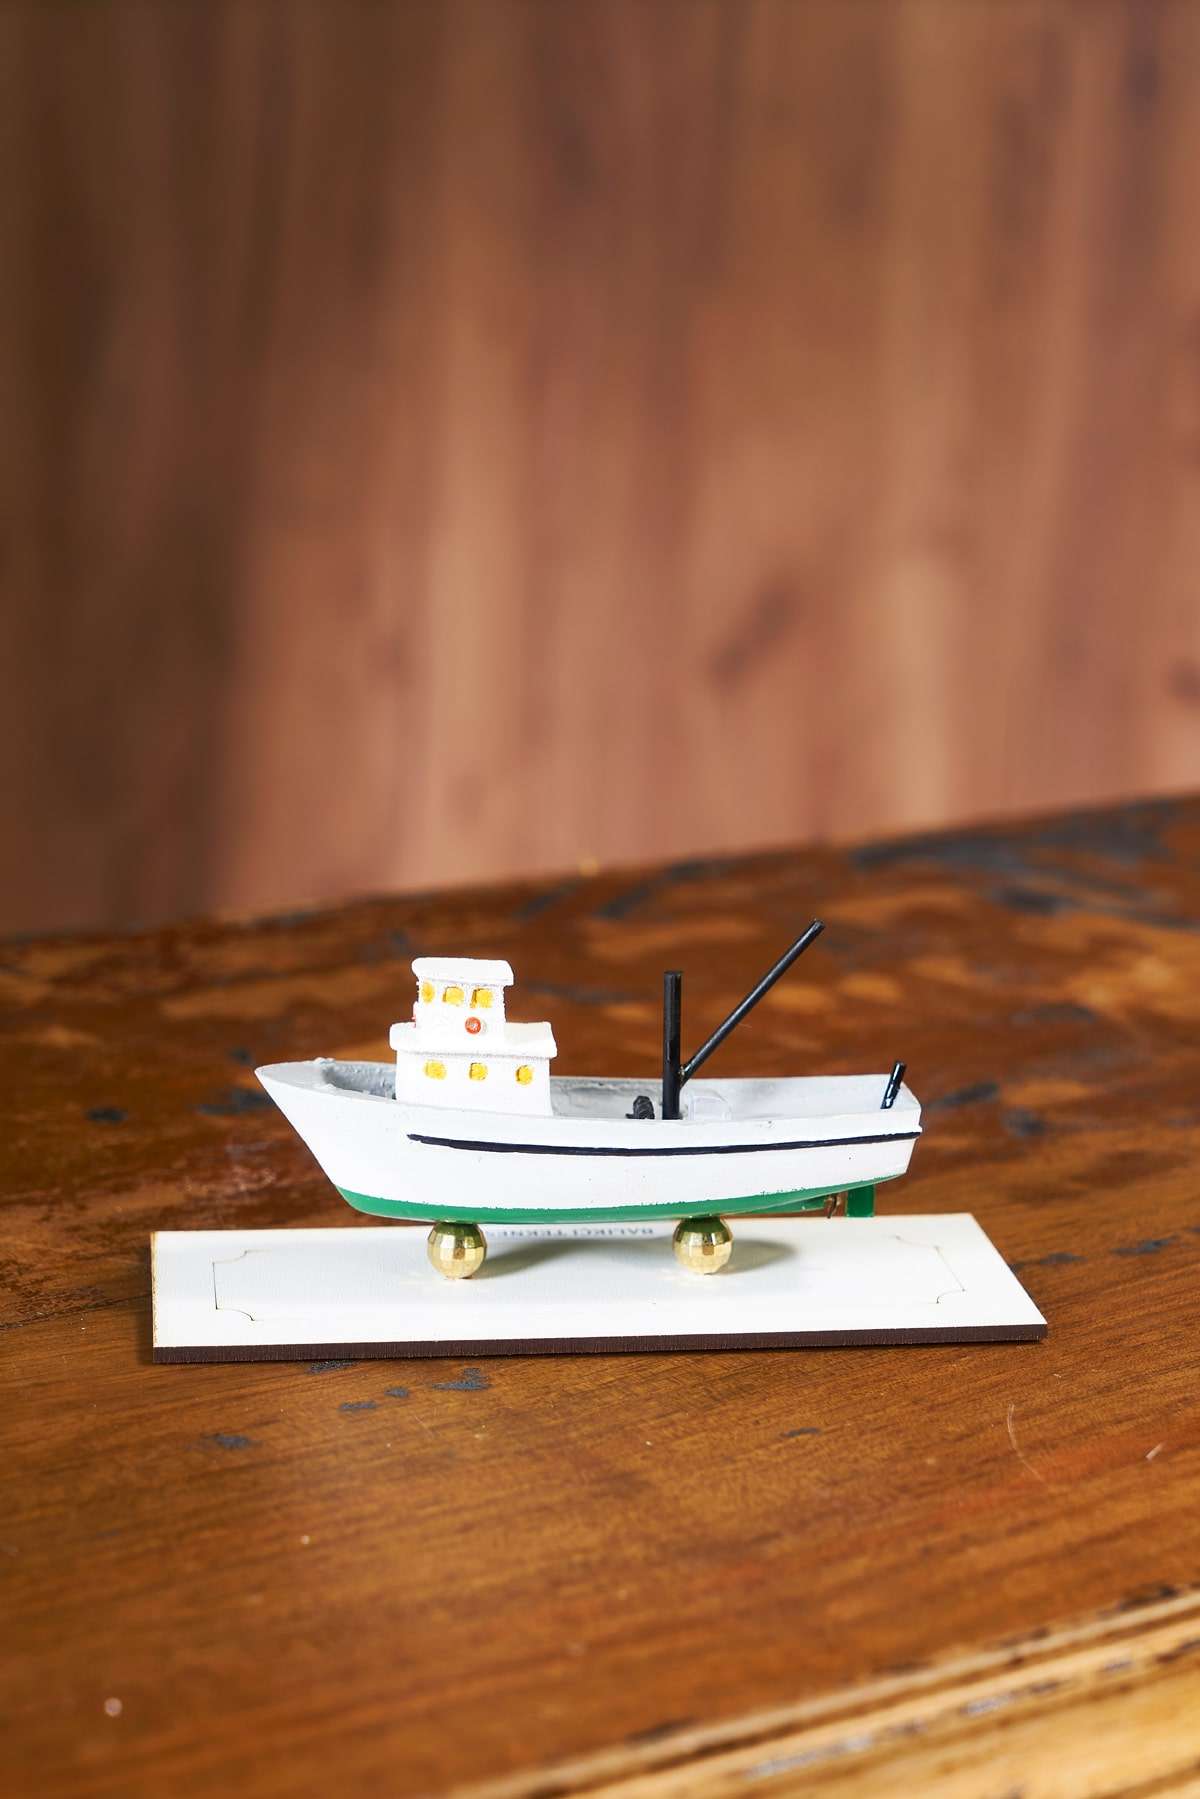 Fishing Boat Model - Maritime Goods